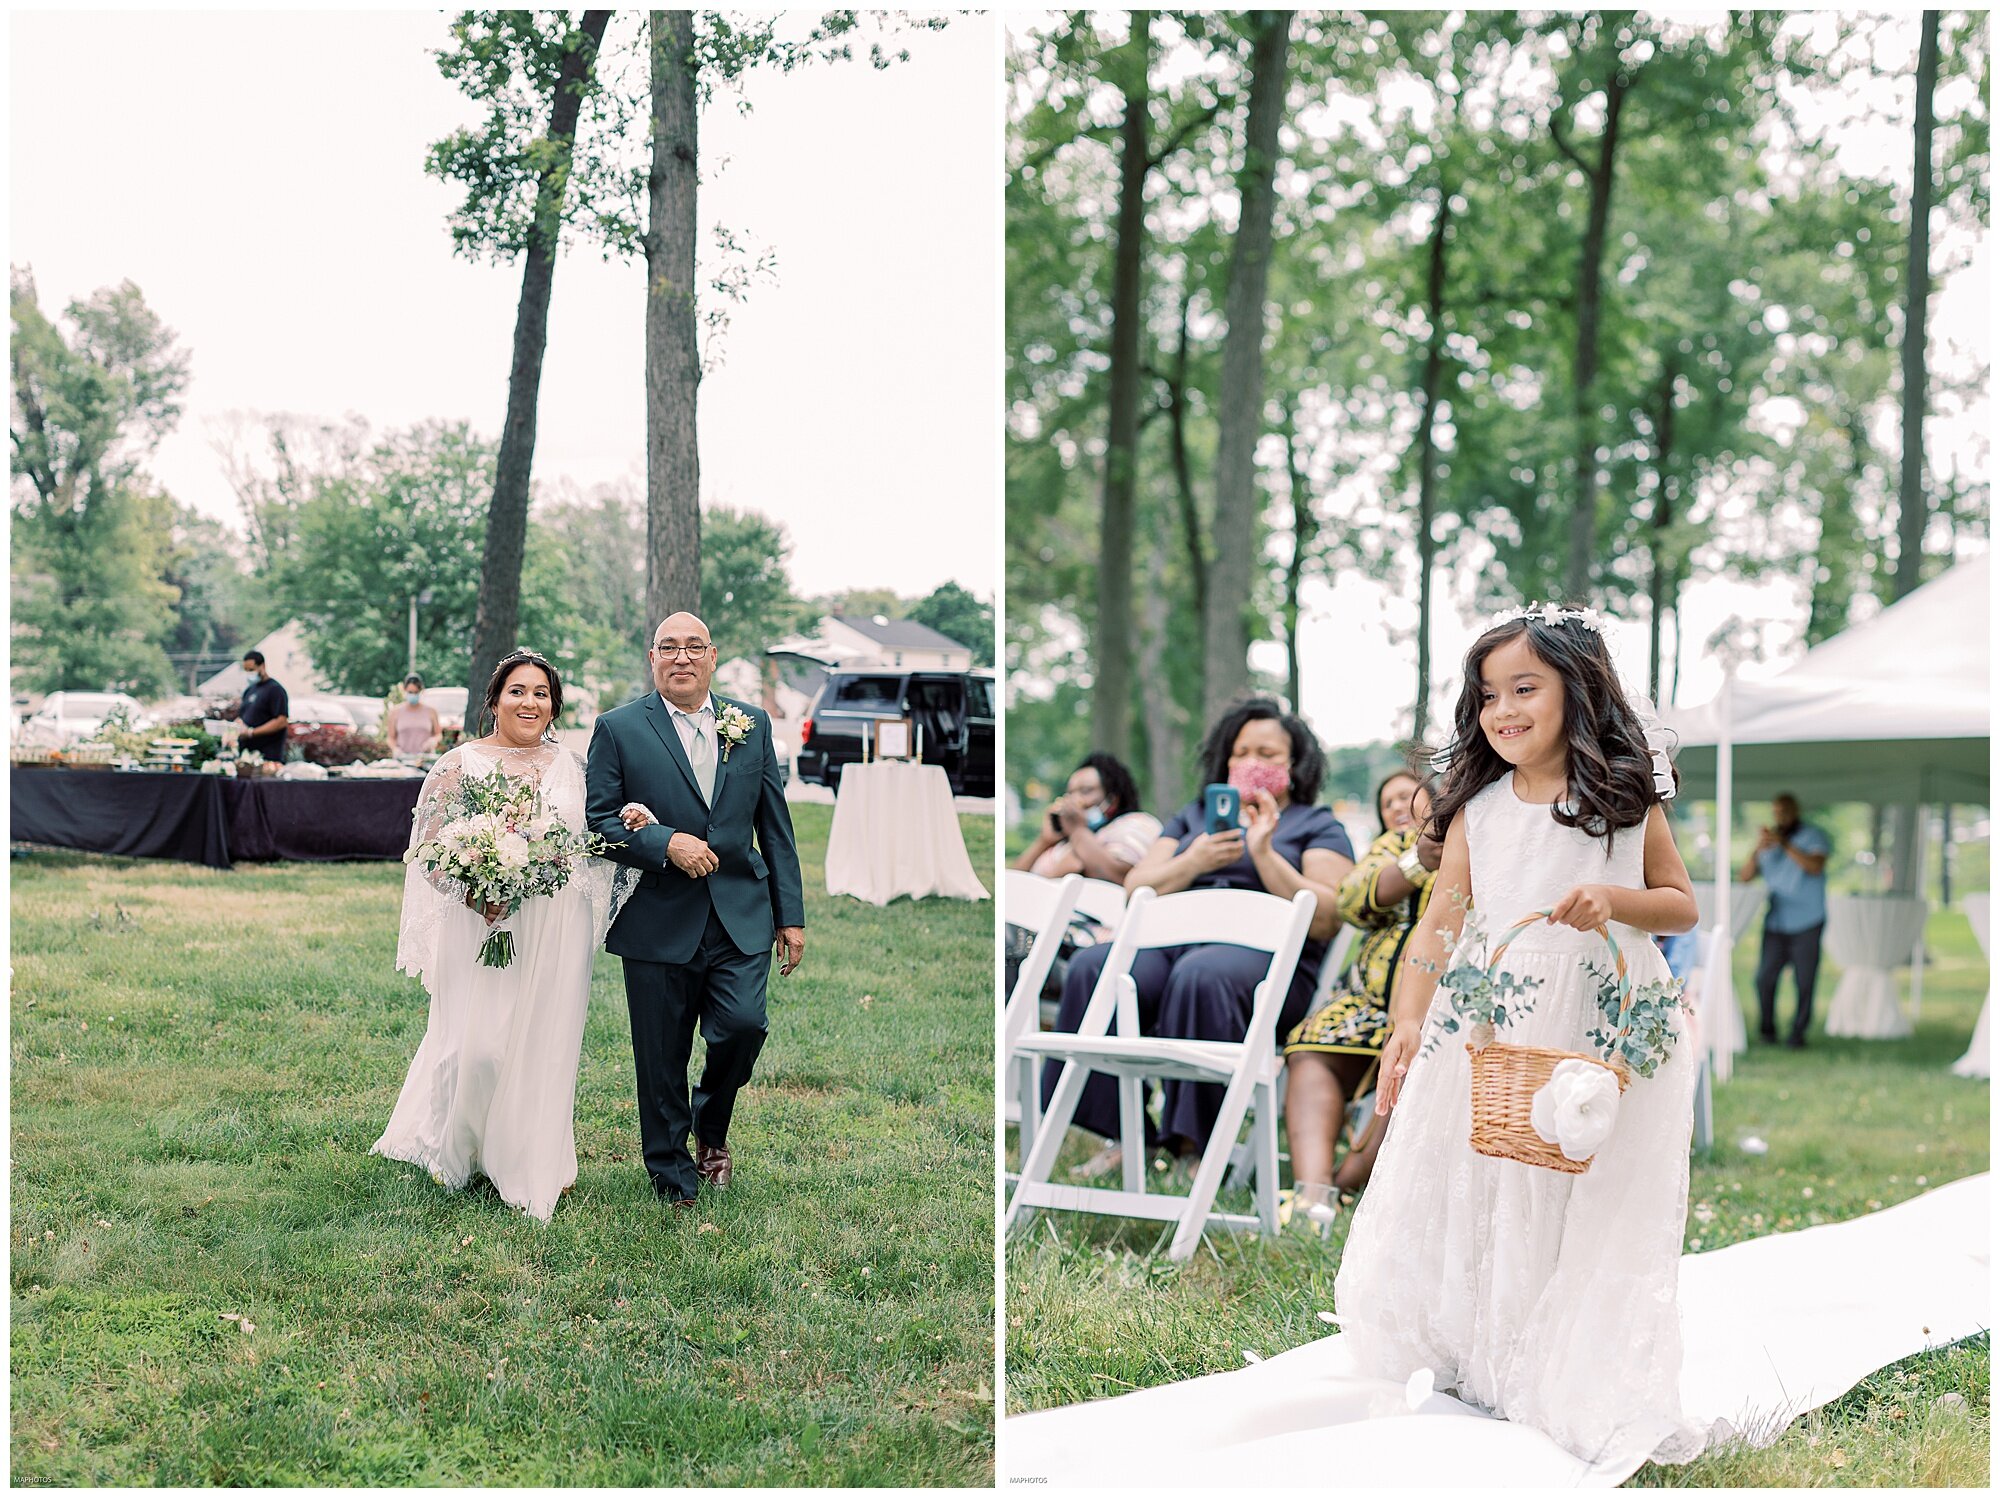 An Intimate Backyard Wedding in Cherry Hill, NJ